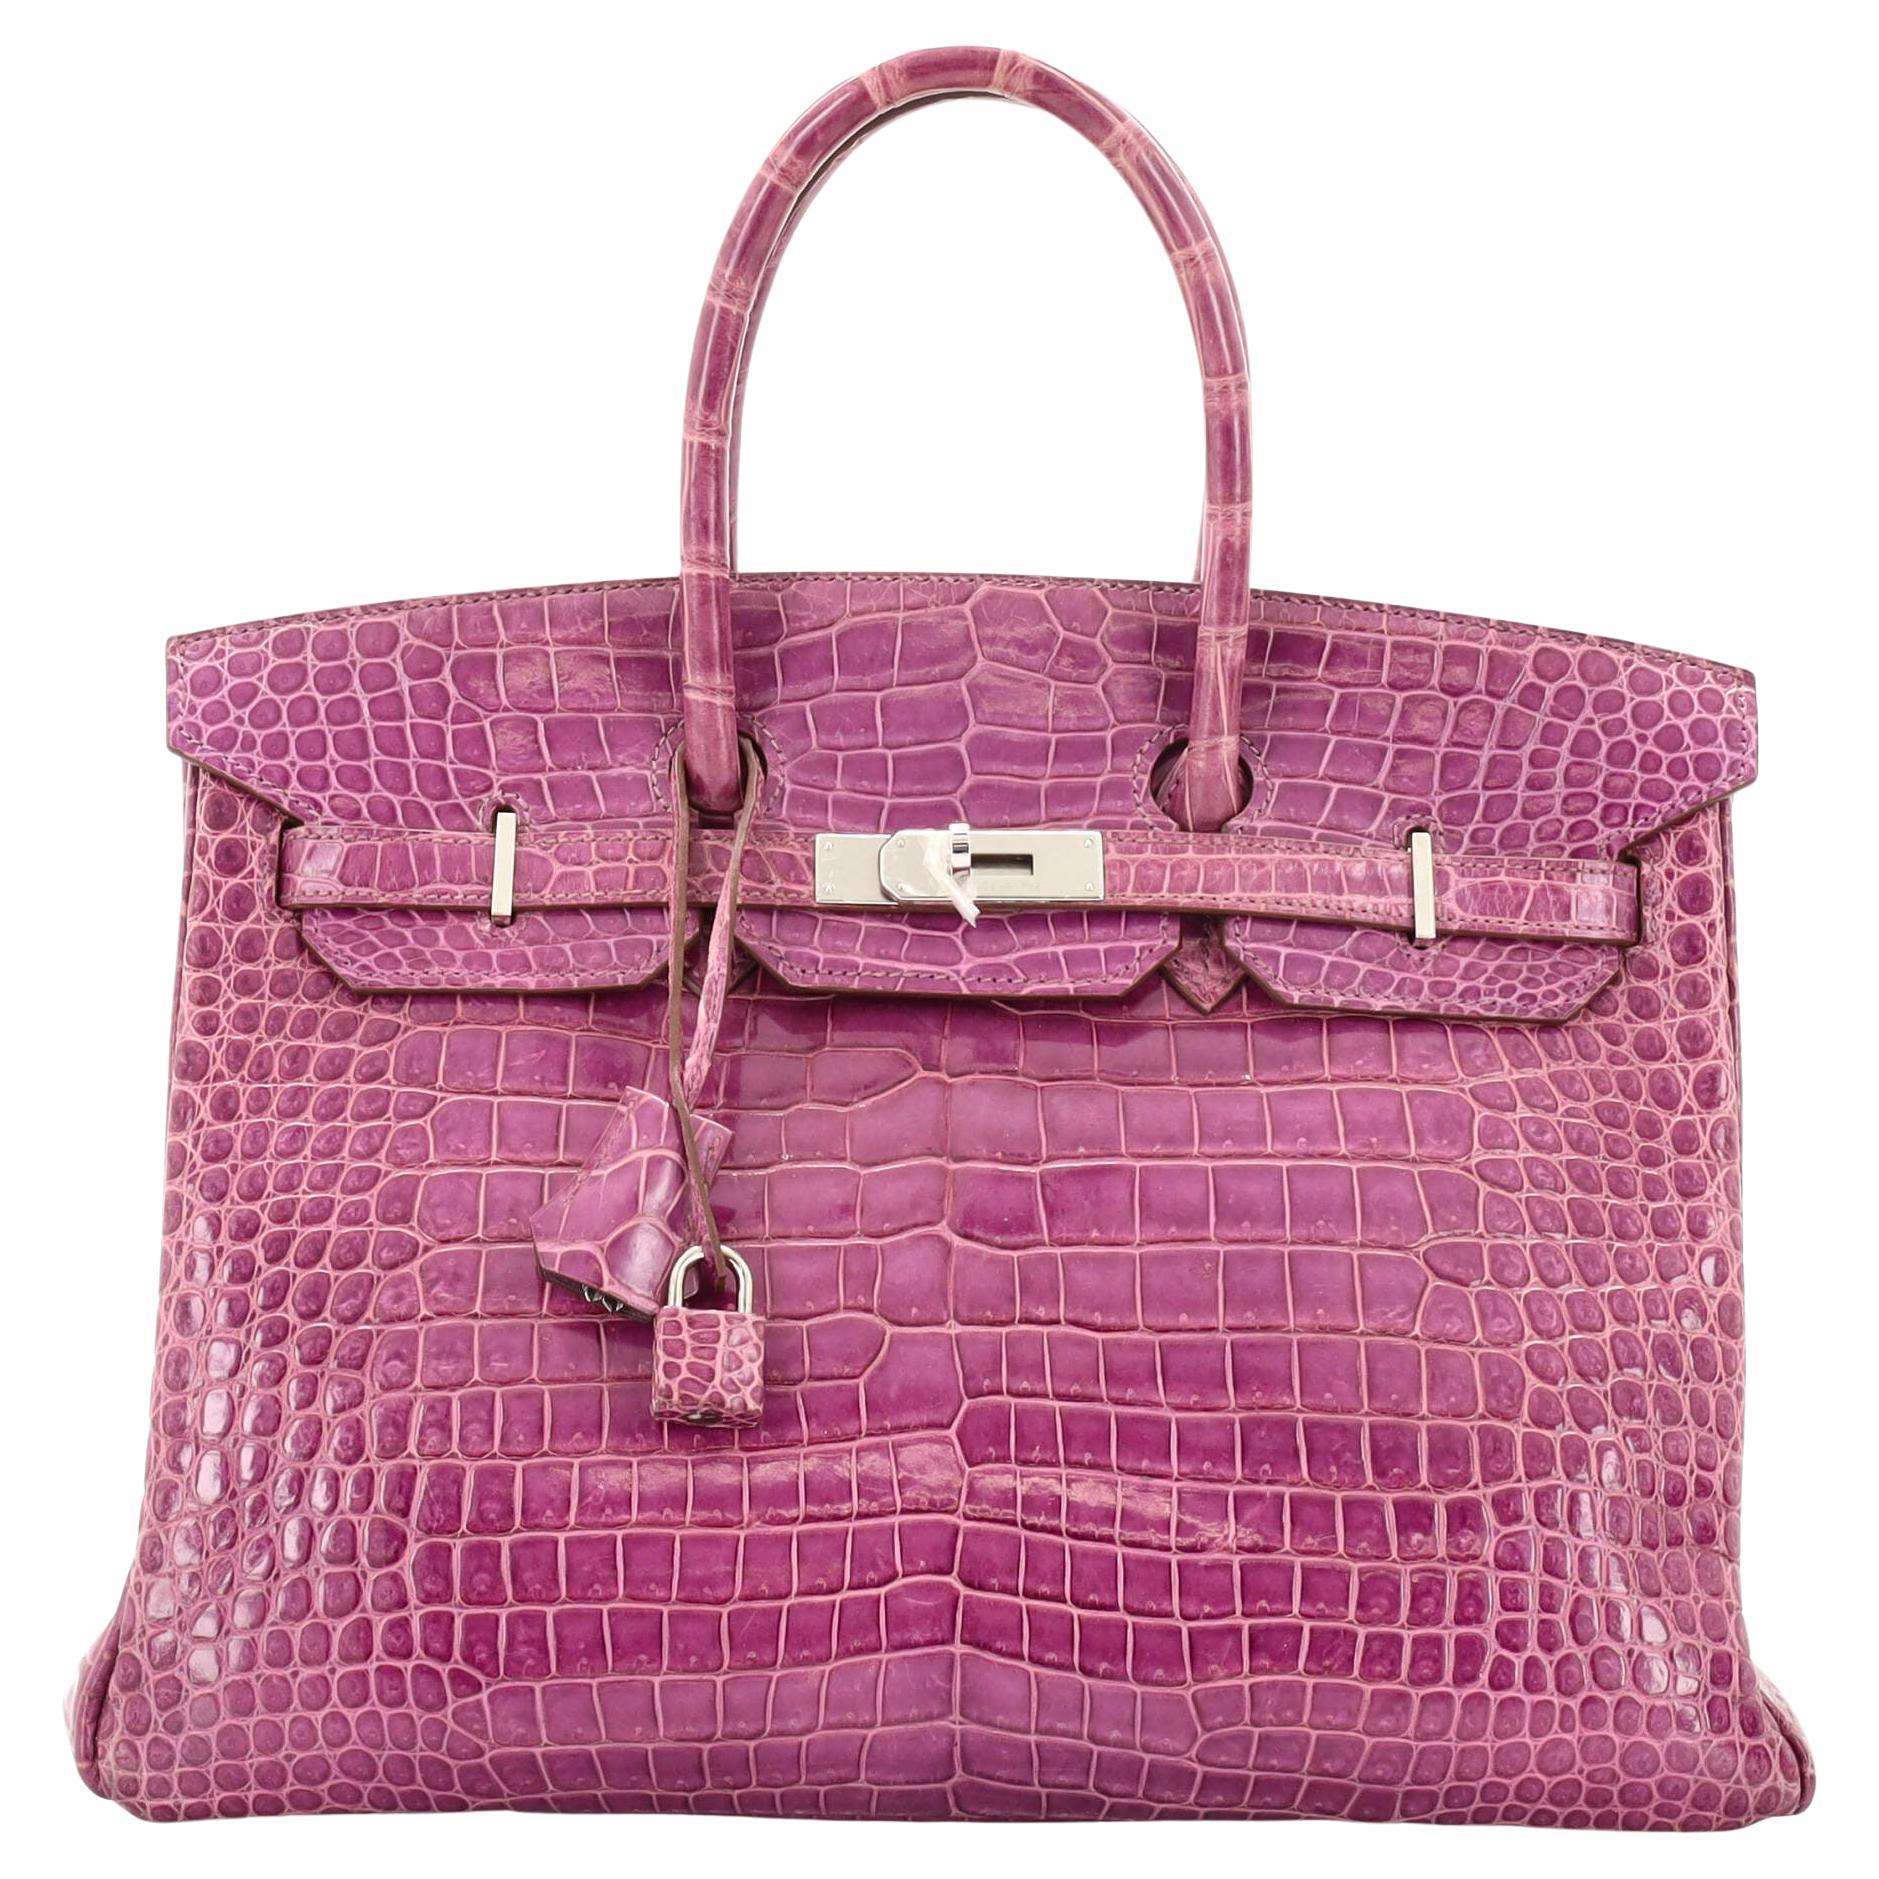 Hermes Birkin Handbag Violet Shiny Porosus Crocodile with Palladium Hardware 35